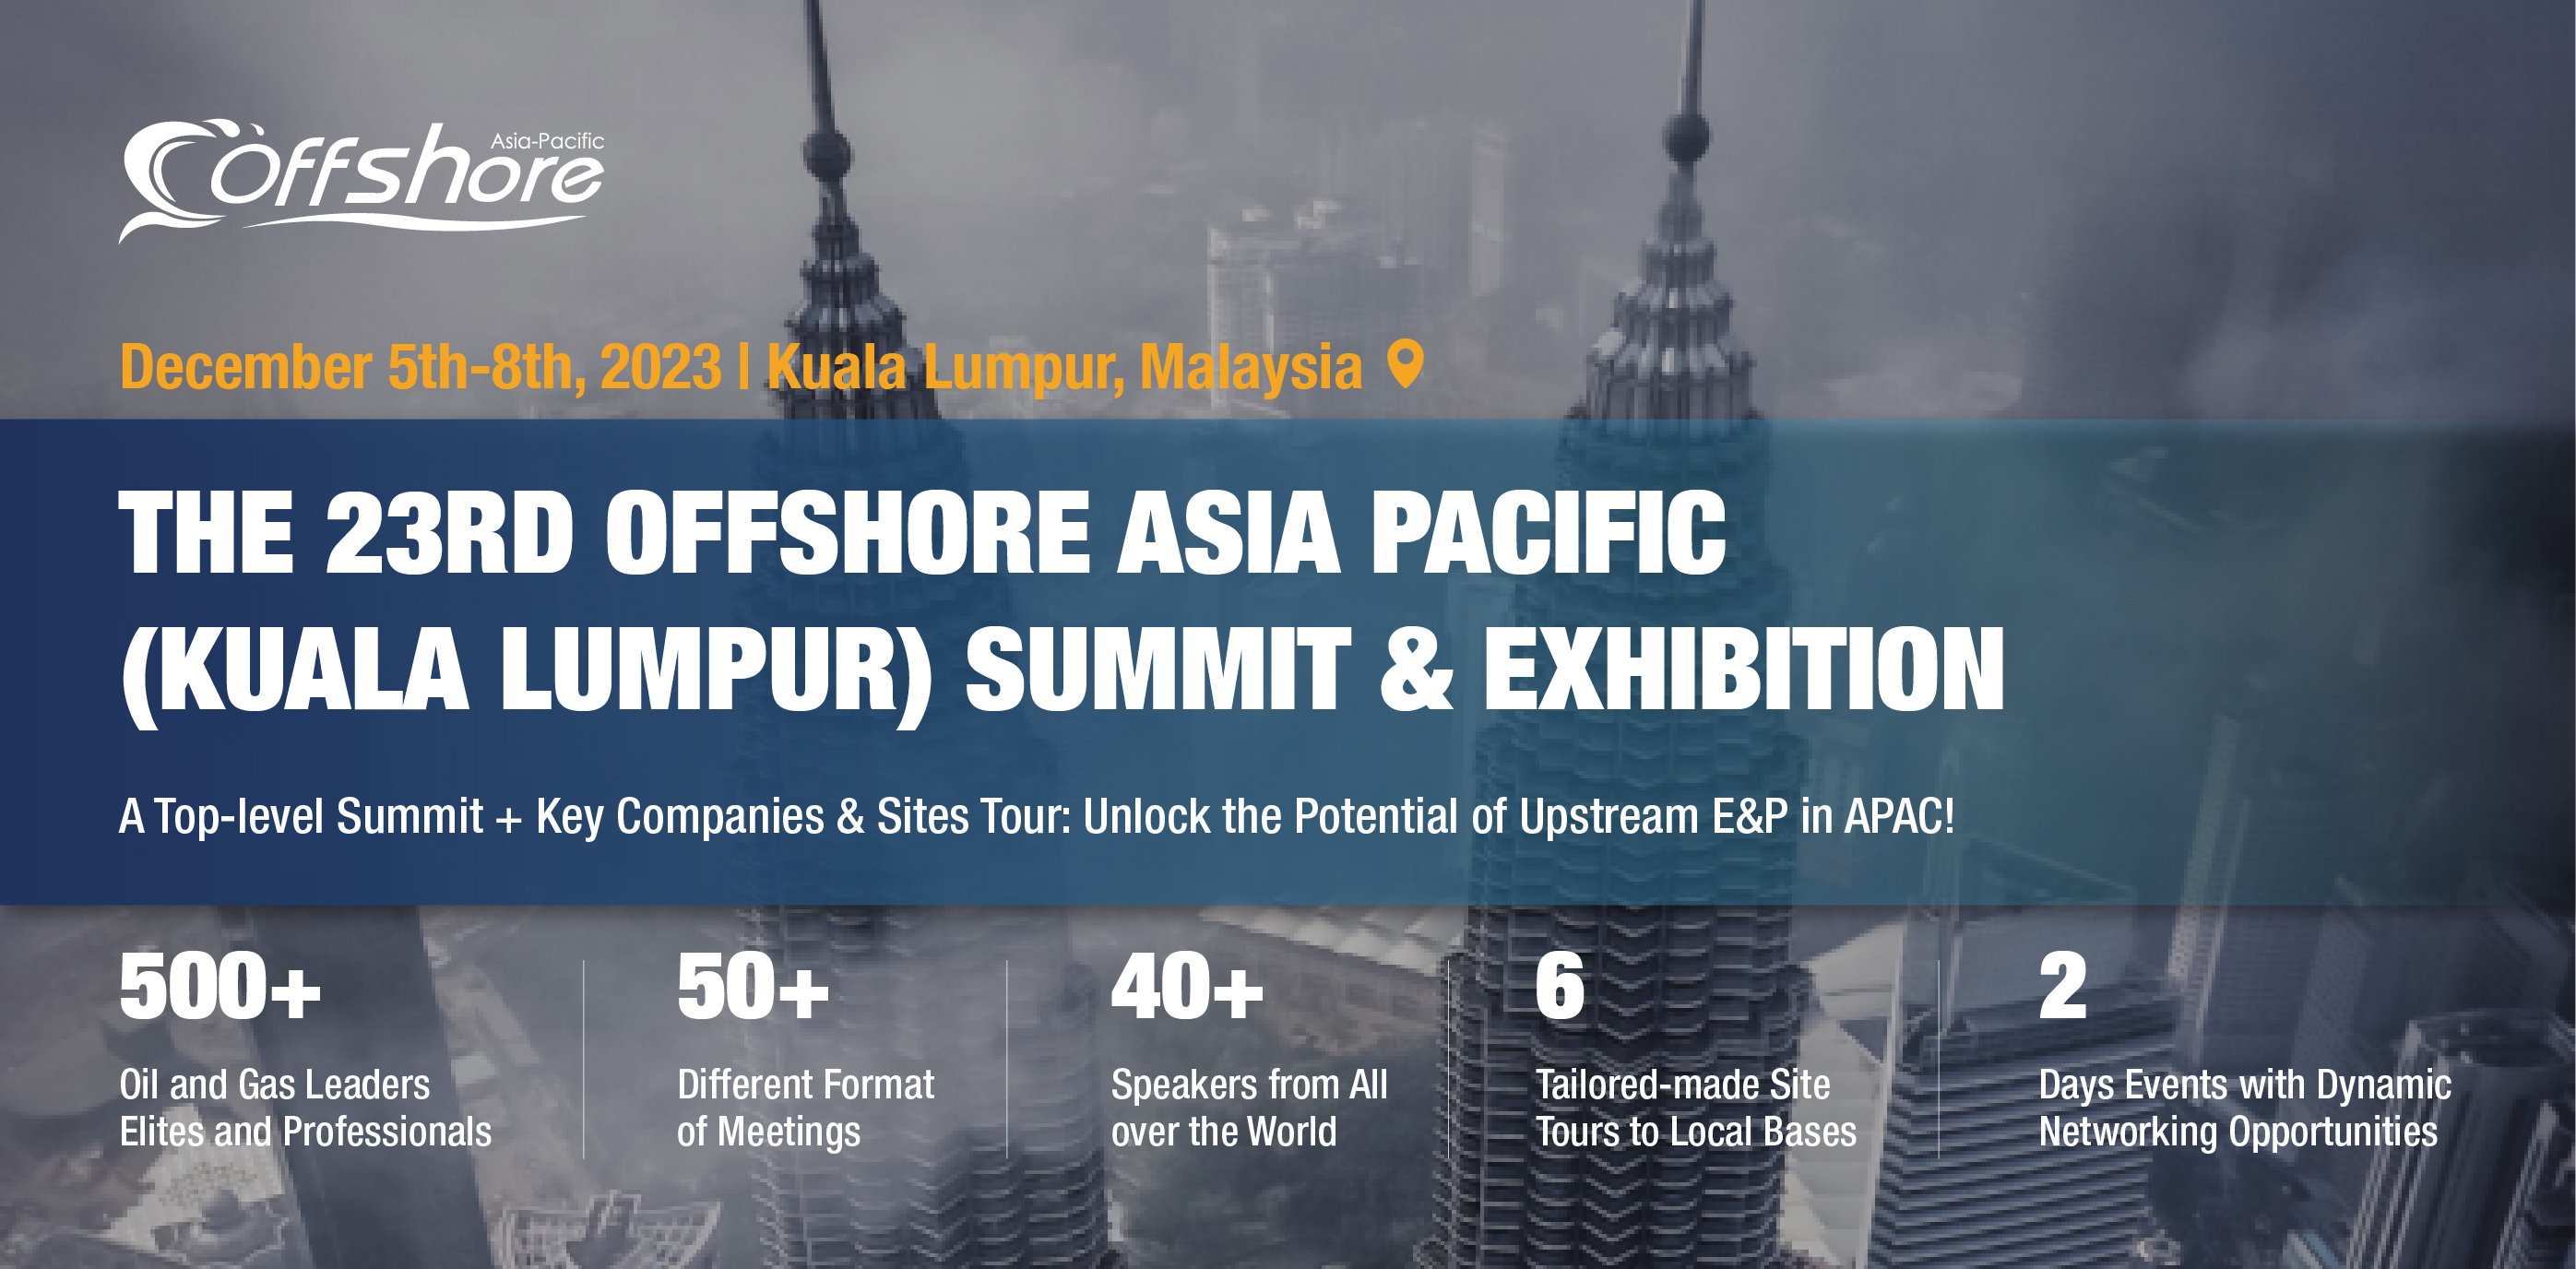 The 23rd Offshore Asia-Pacific SummitExhibitio